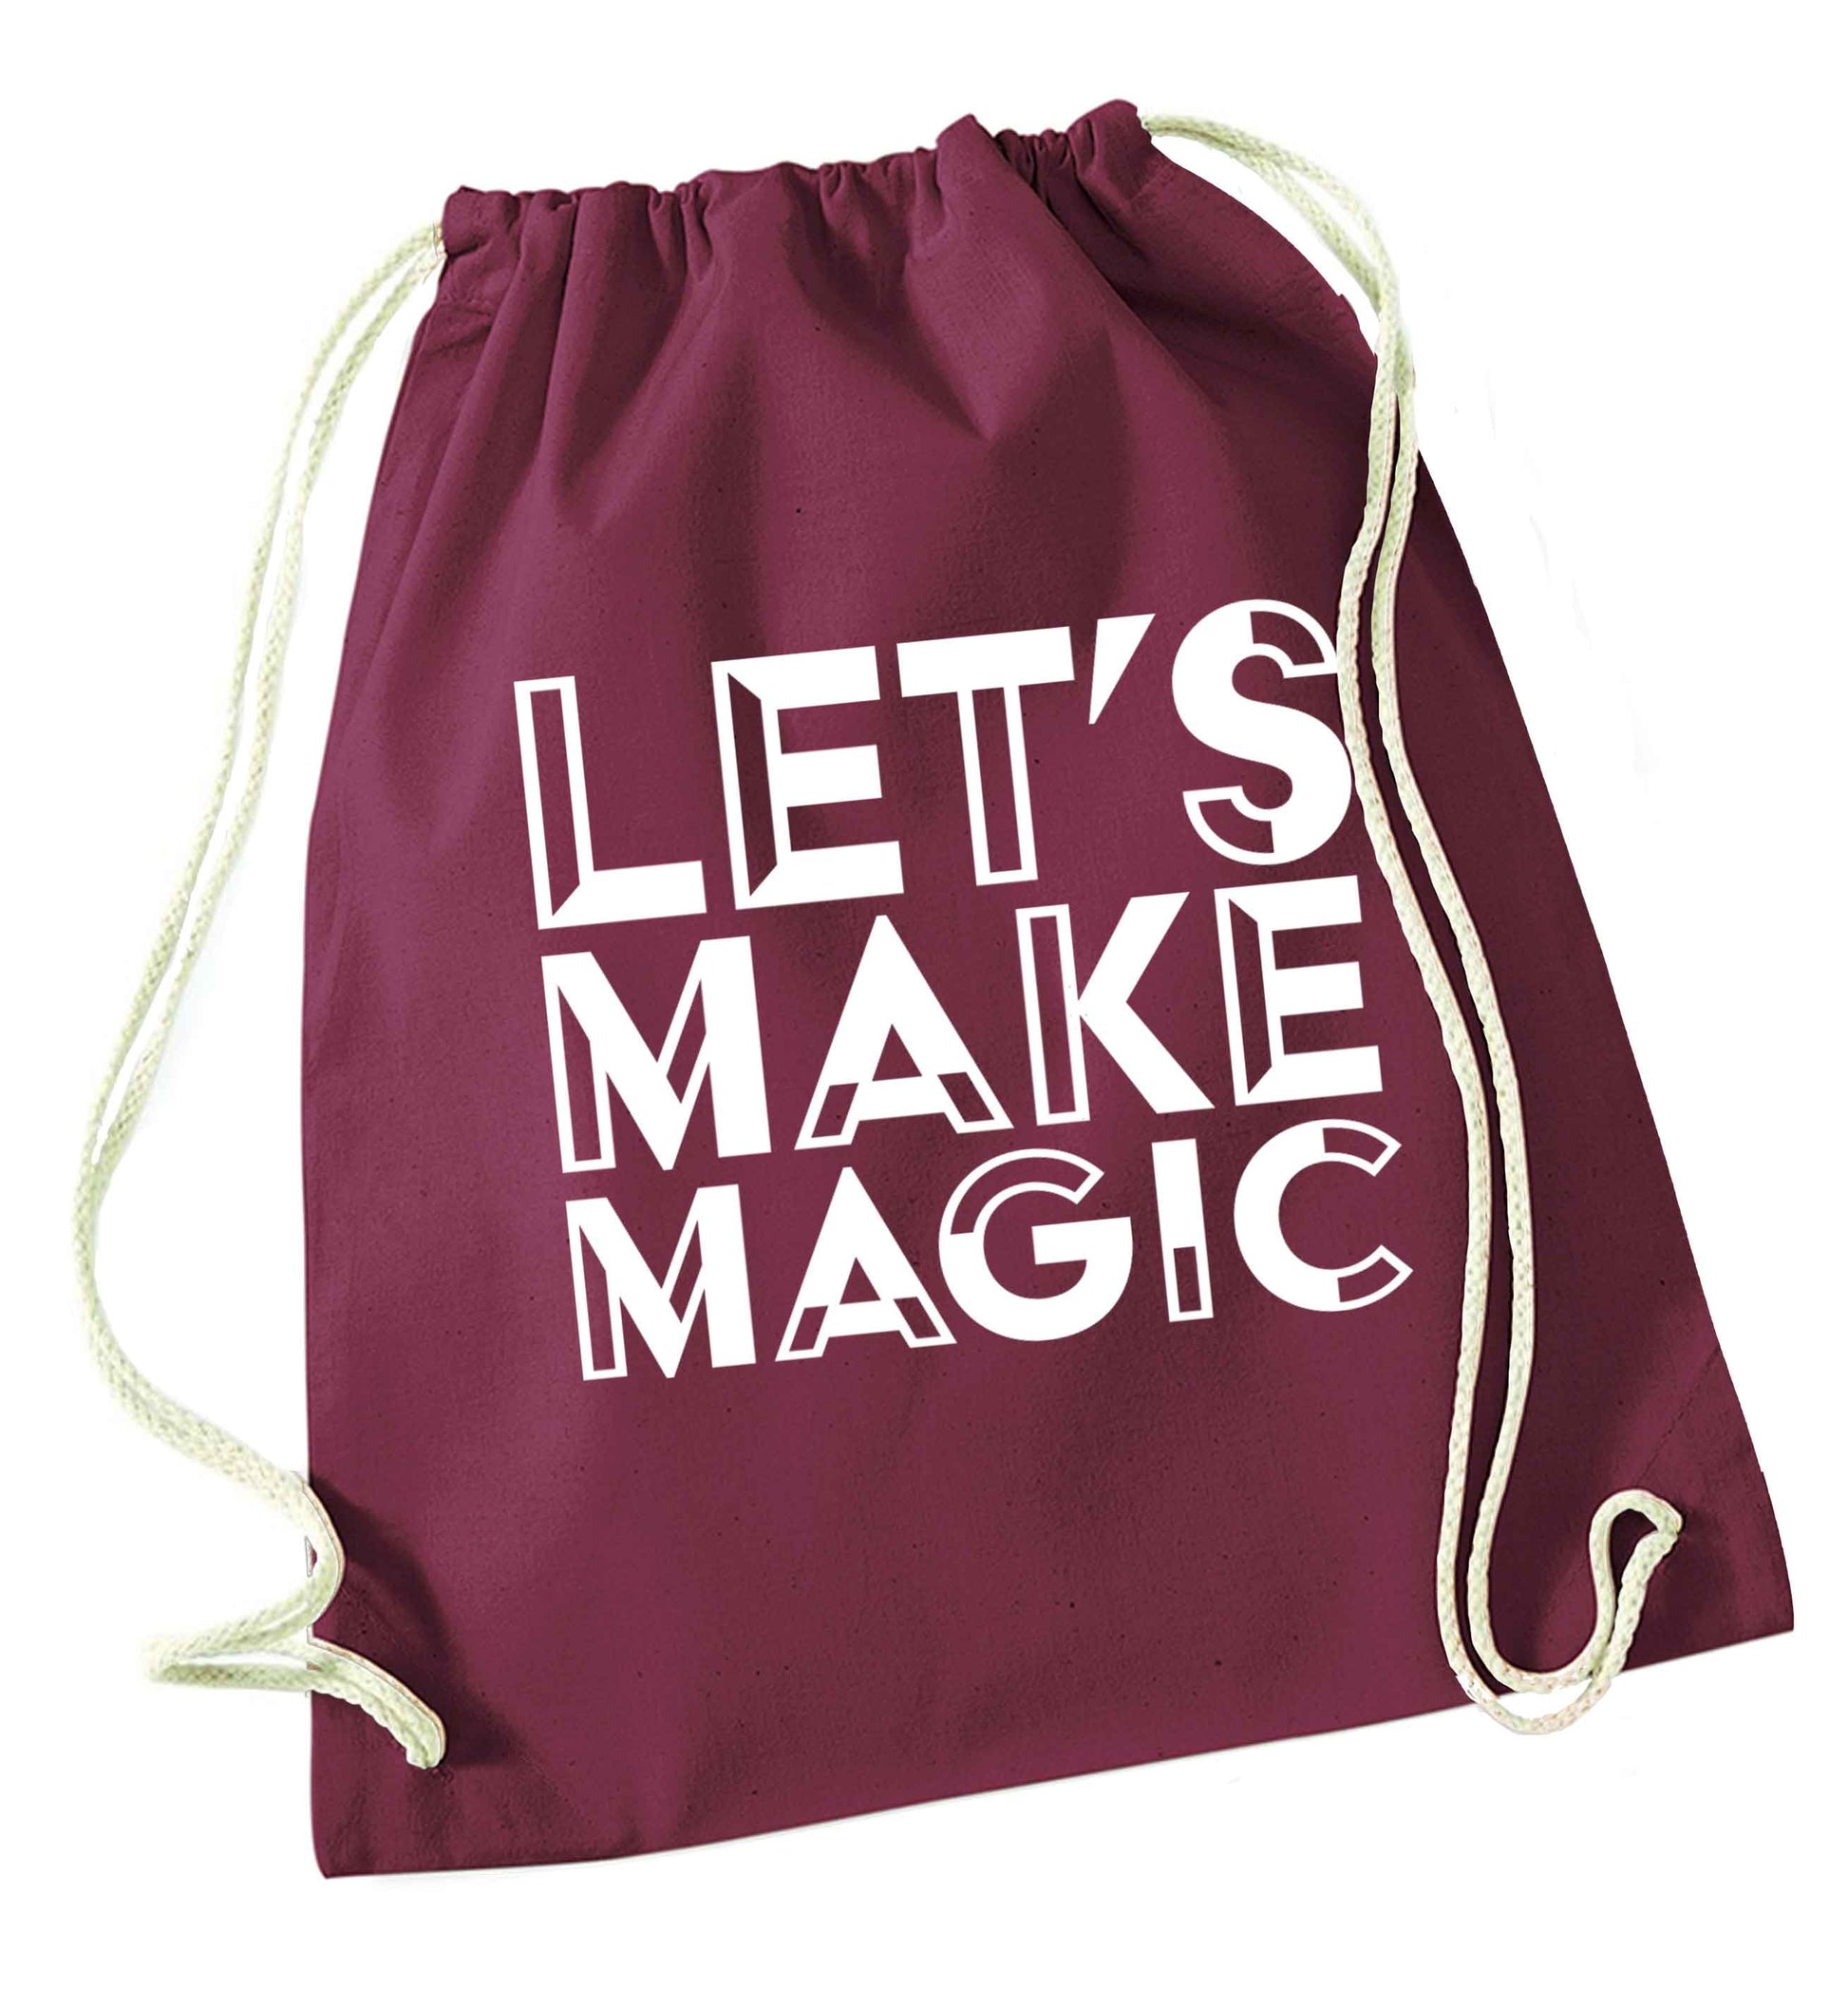 Let's make magic maroon drawstring bag